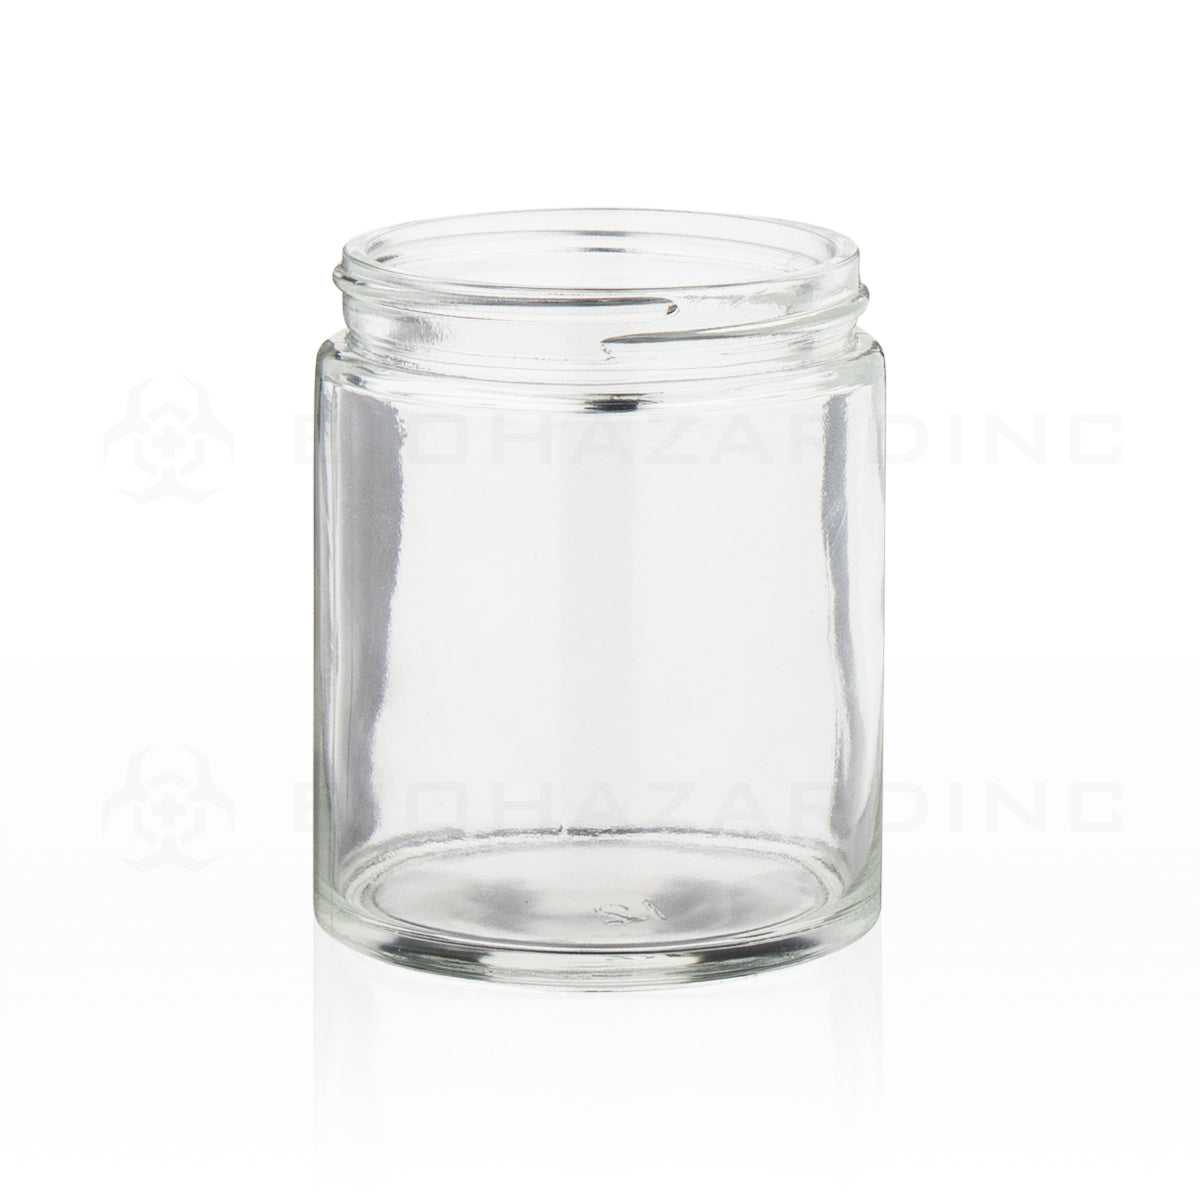 Glass Jar | Straight Sided Glass Jars - Clear | 63mm - 6oz - 24 Count Glass Jar Biohazard Inc   